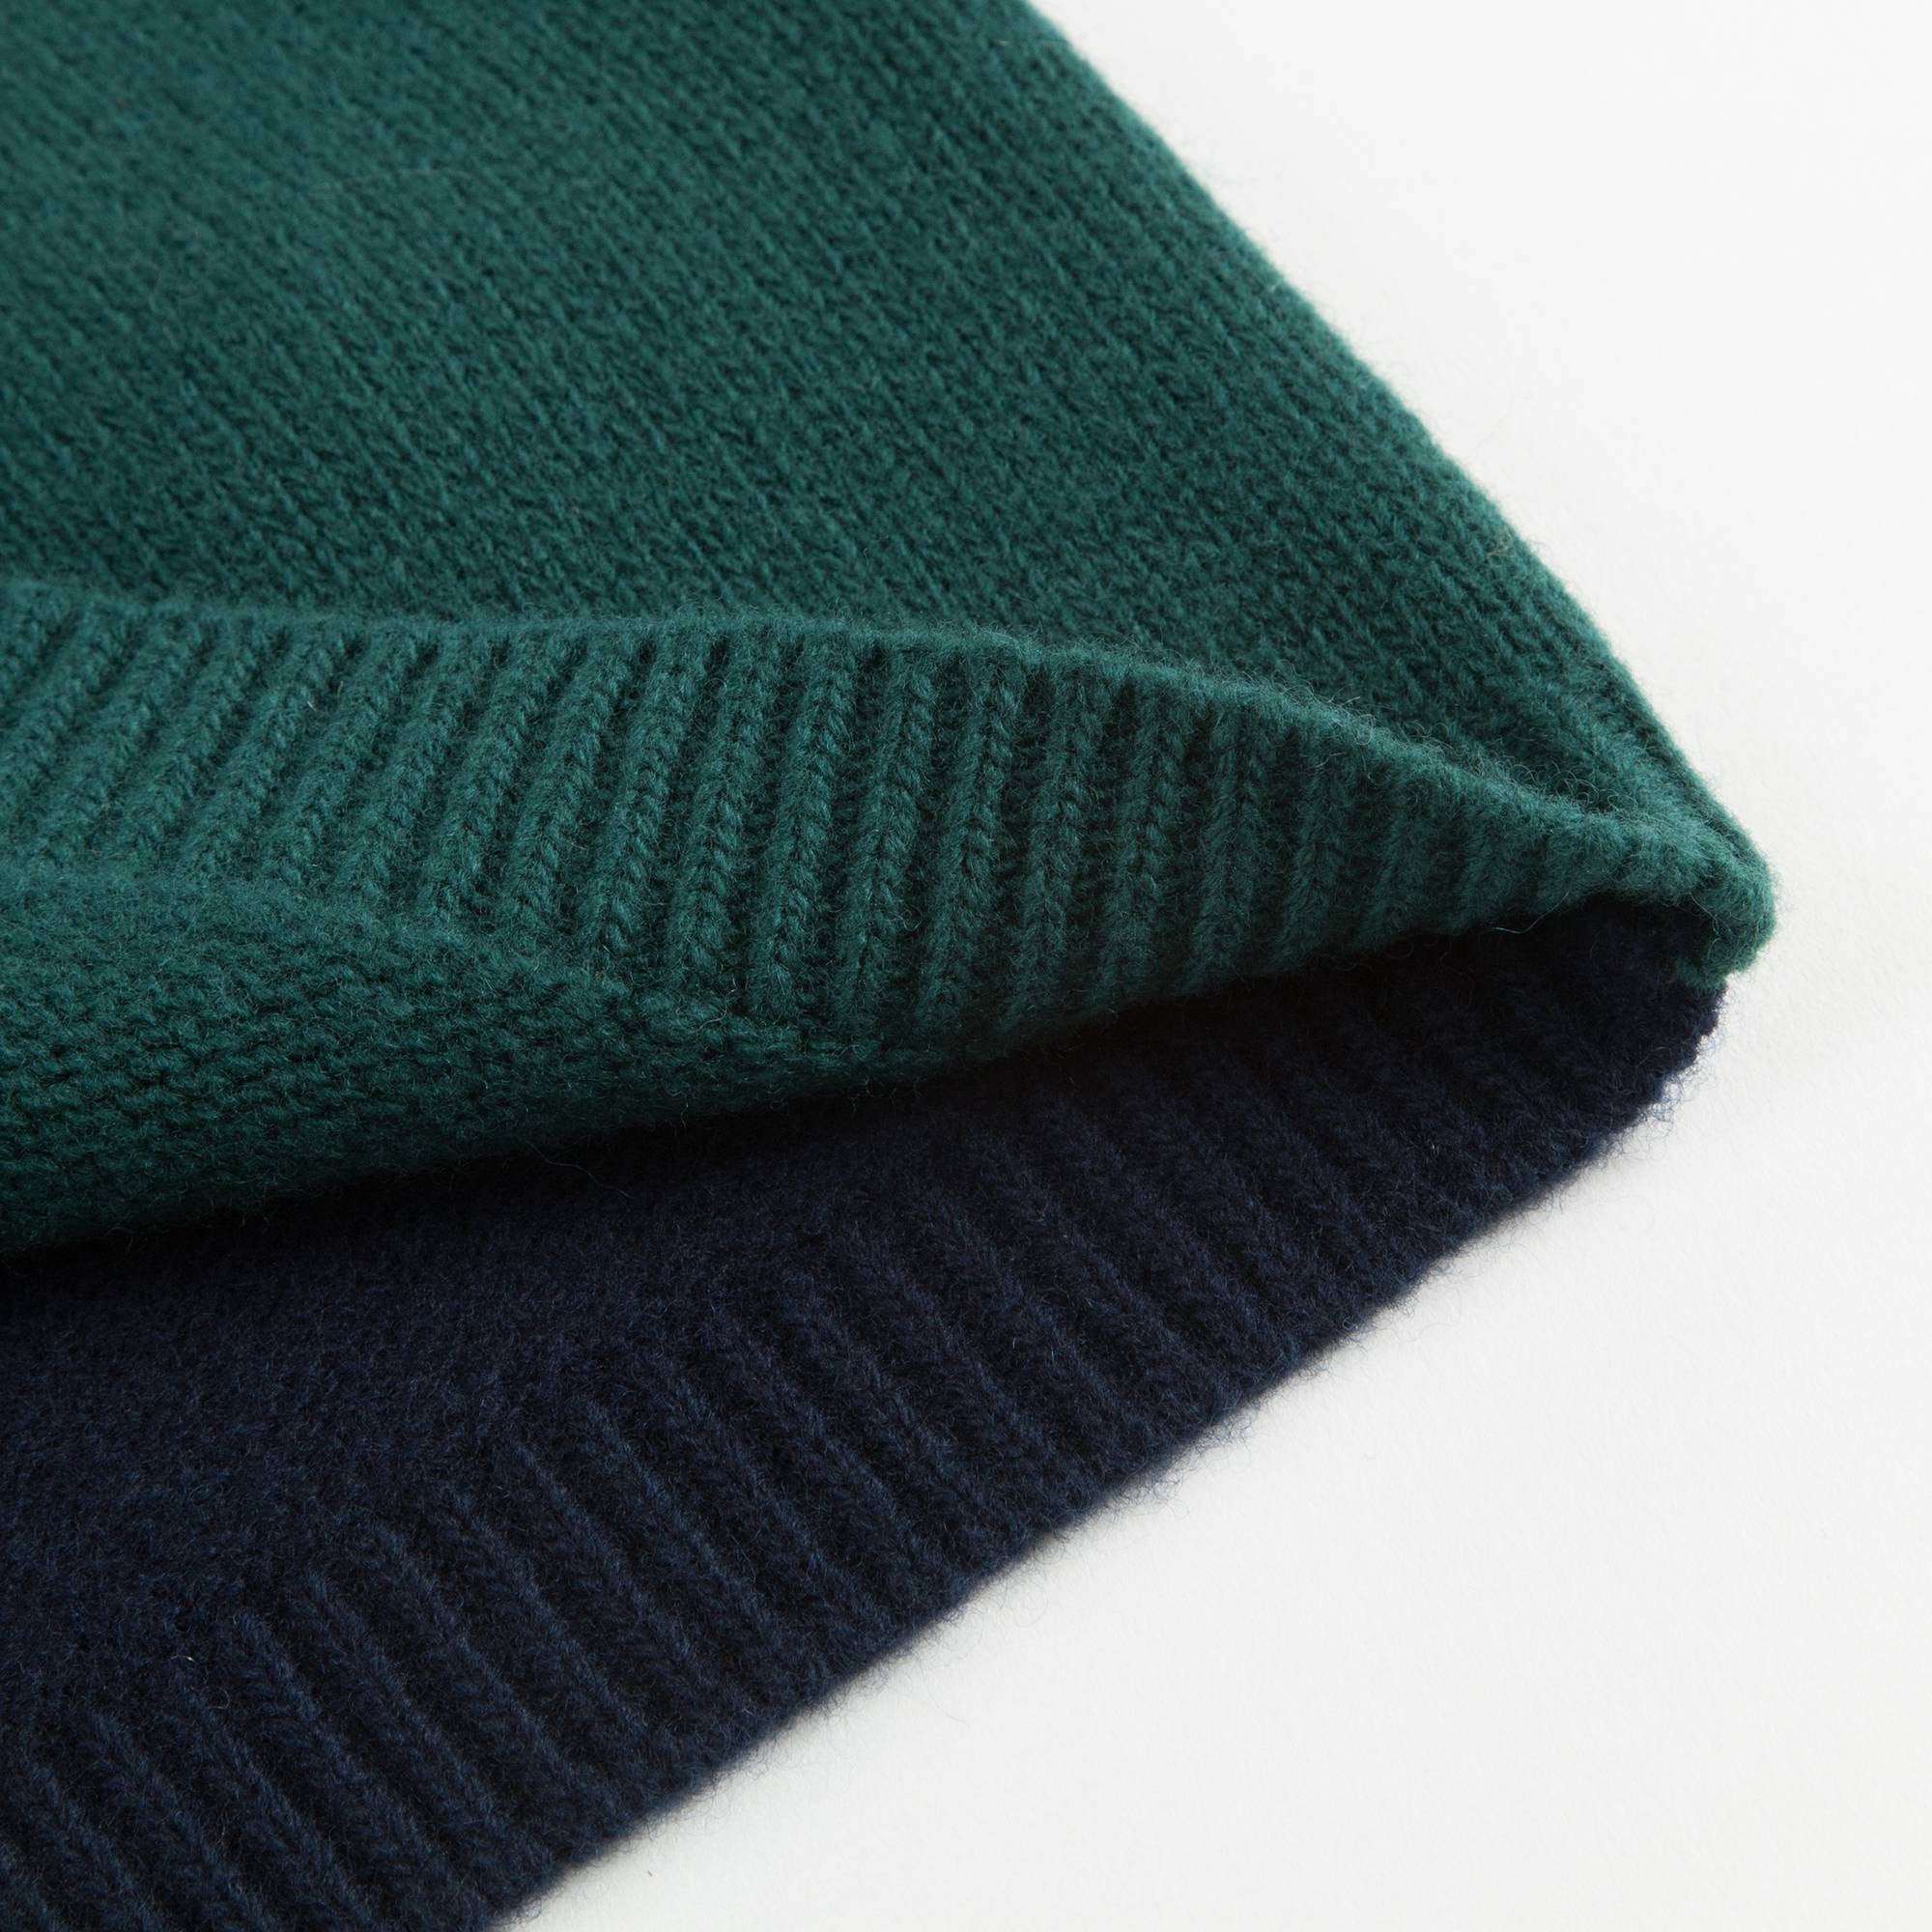 Boys Black & Green Wool Sweater